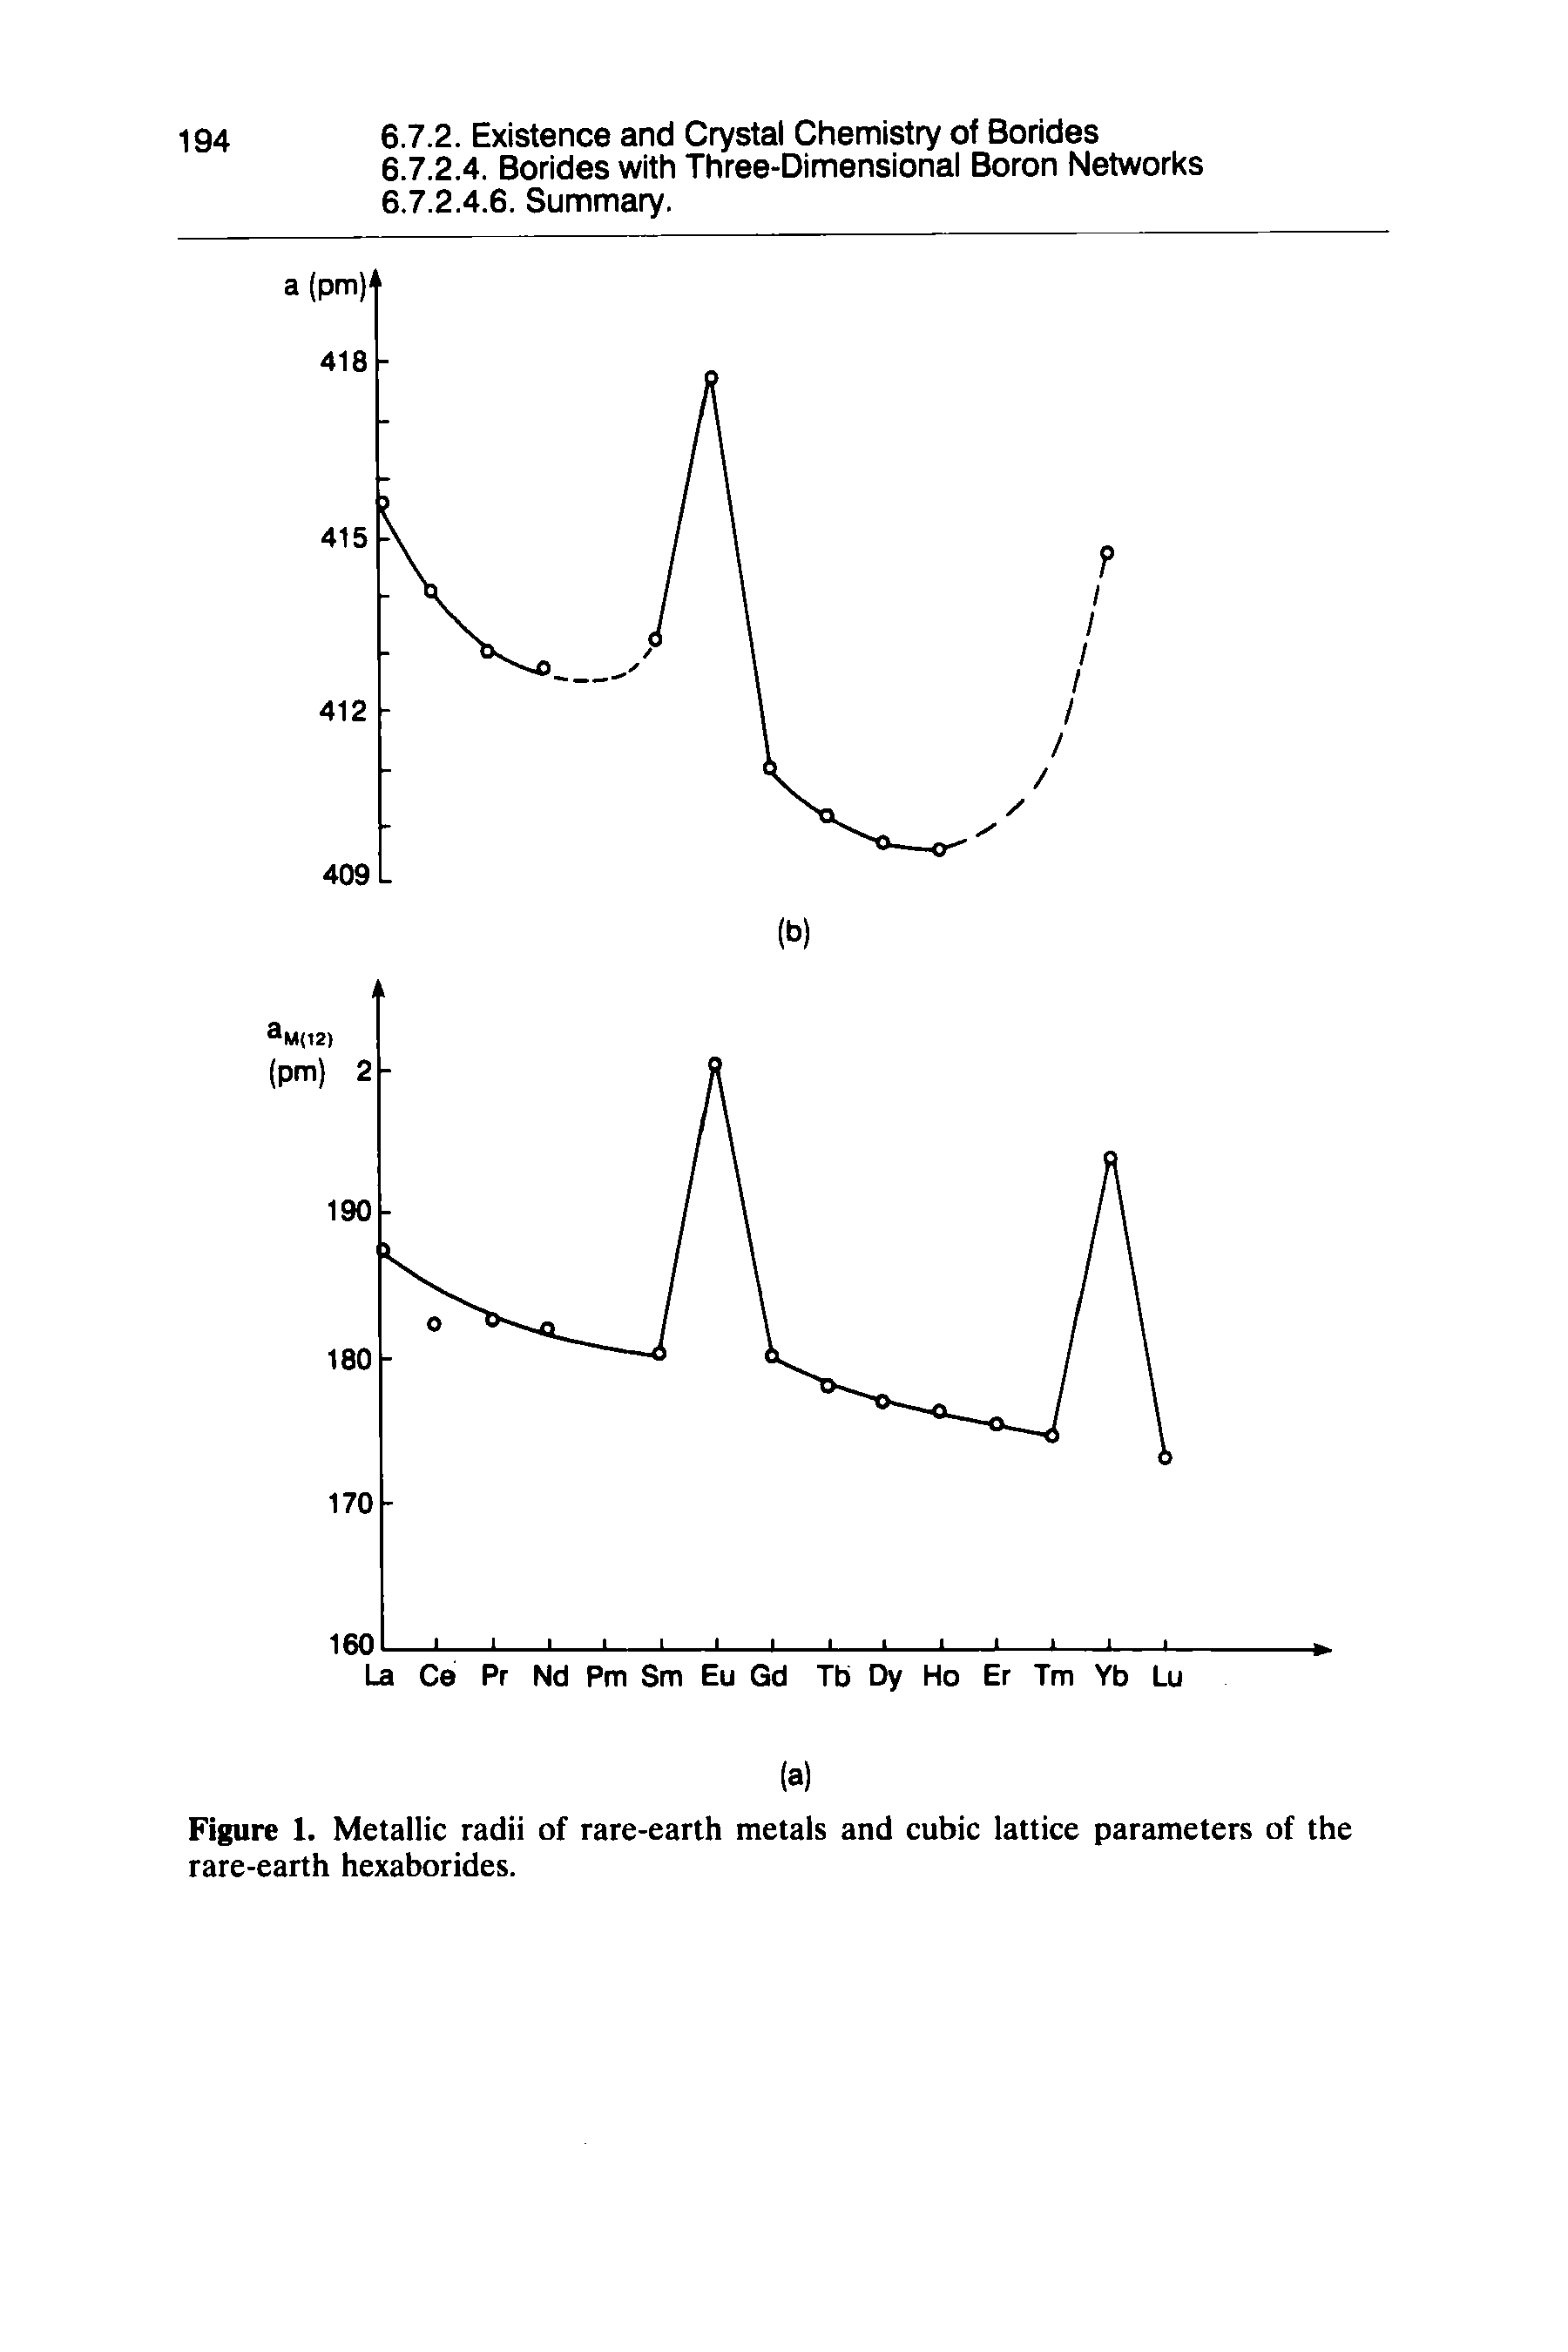 Figure 1. Metallic radii of rare-earth metals and cubic lattice parameters of the rare-earth hexaborides.